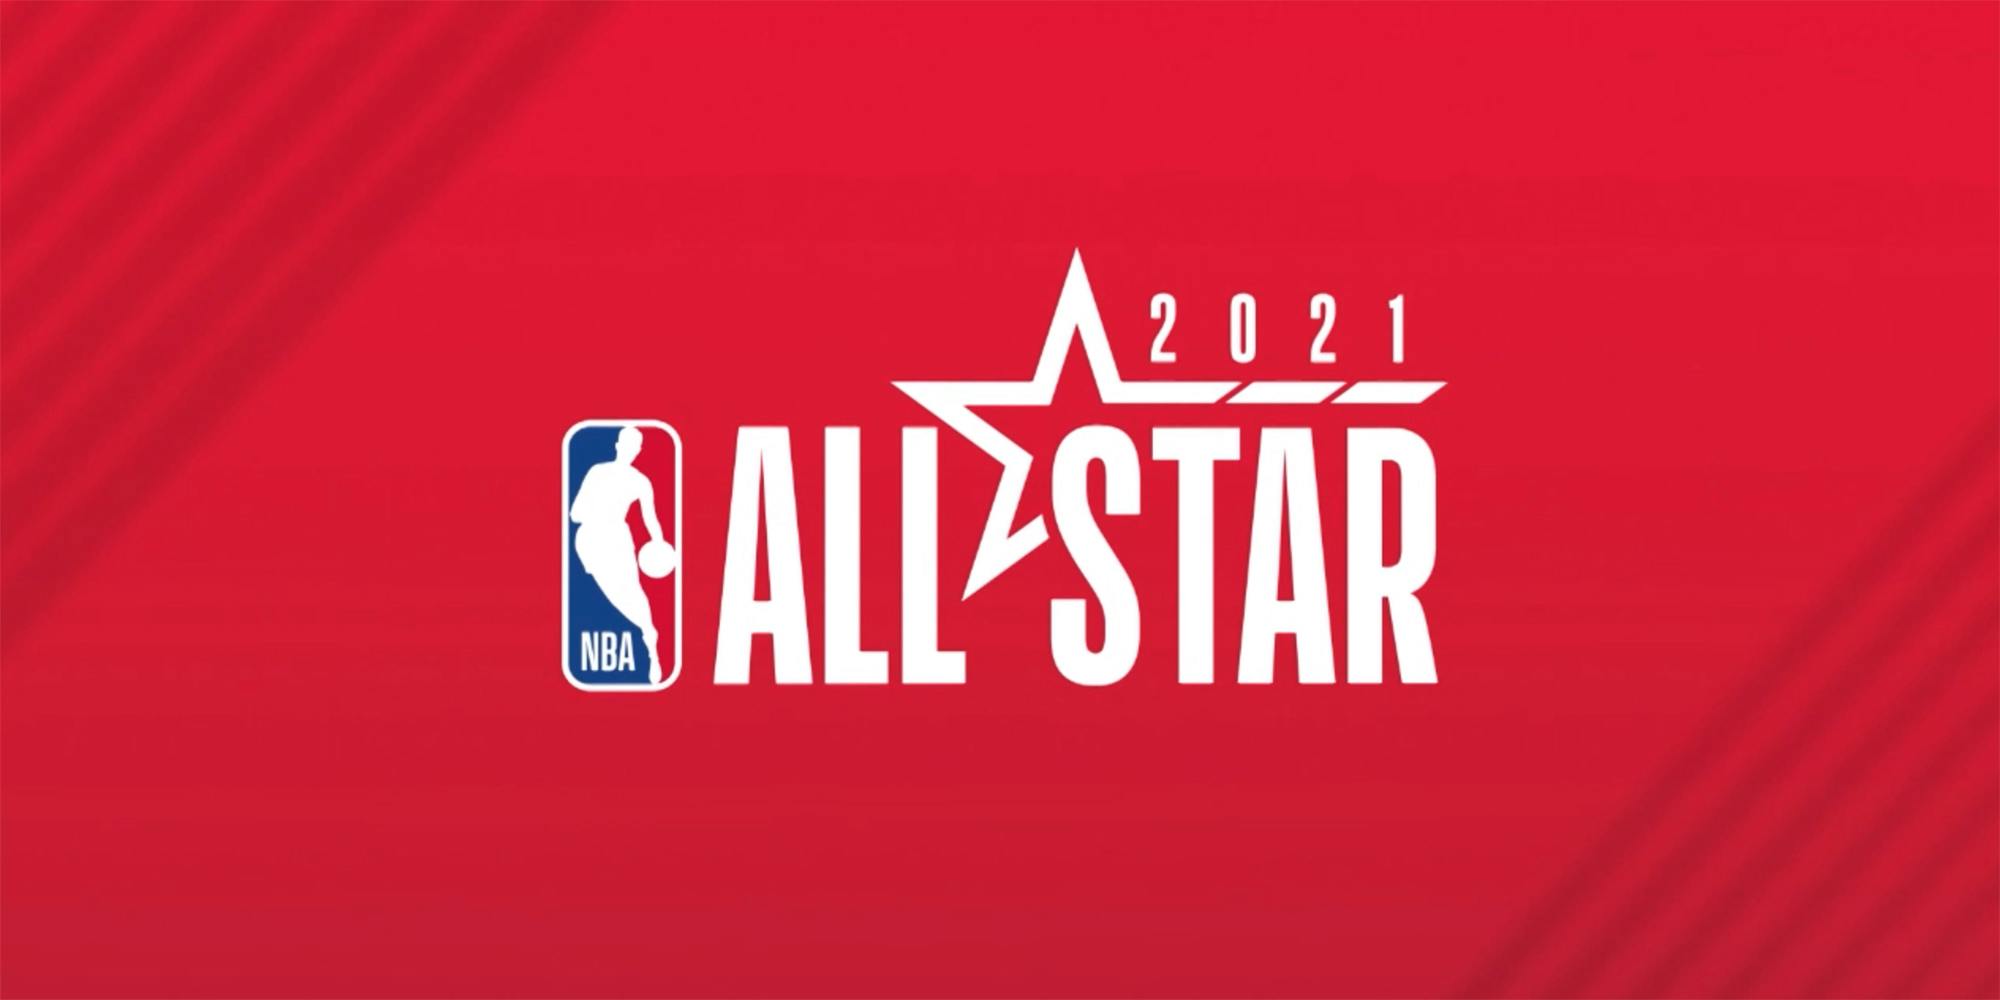 2021 nba all-star game logo